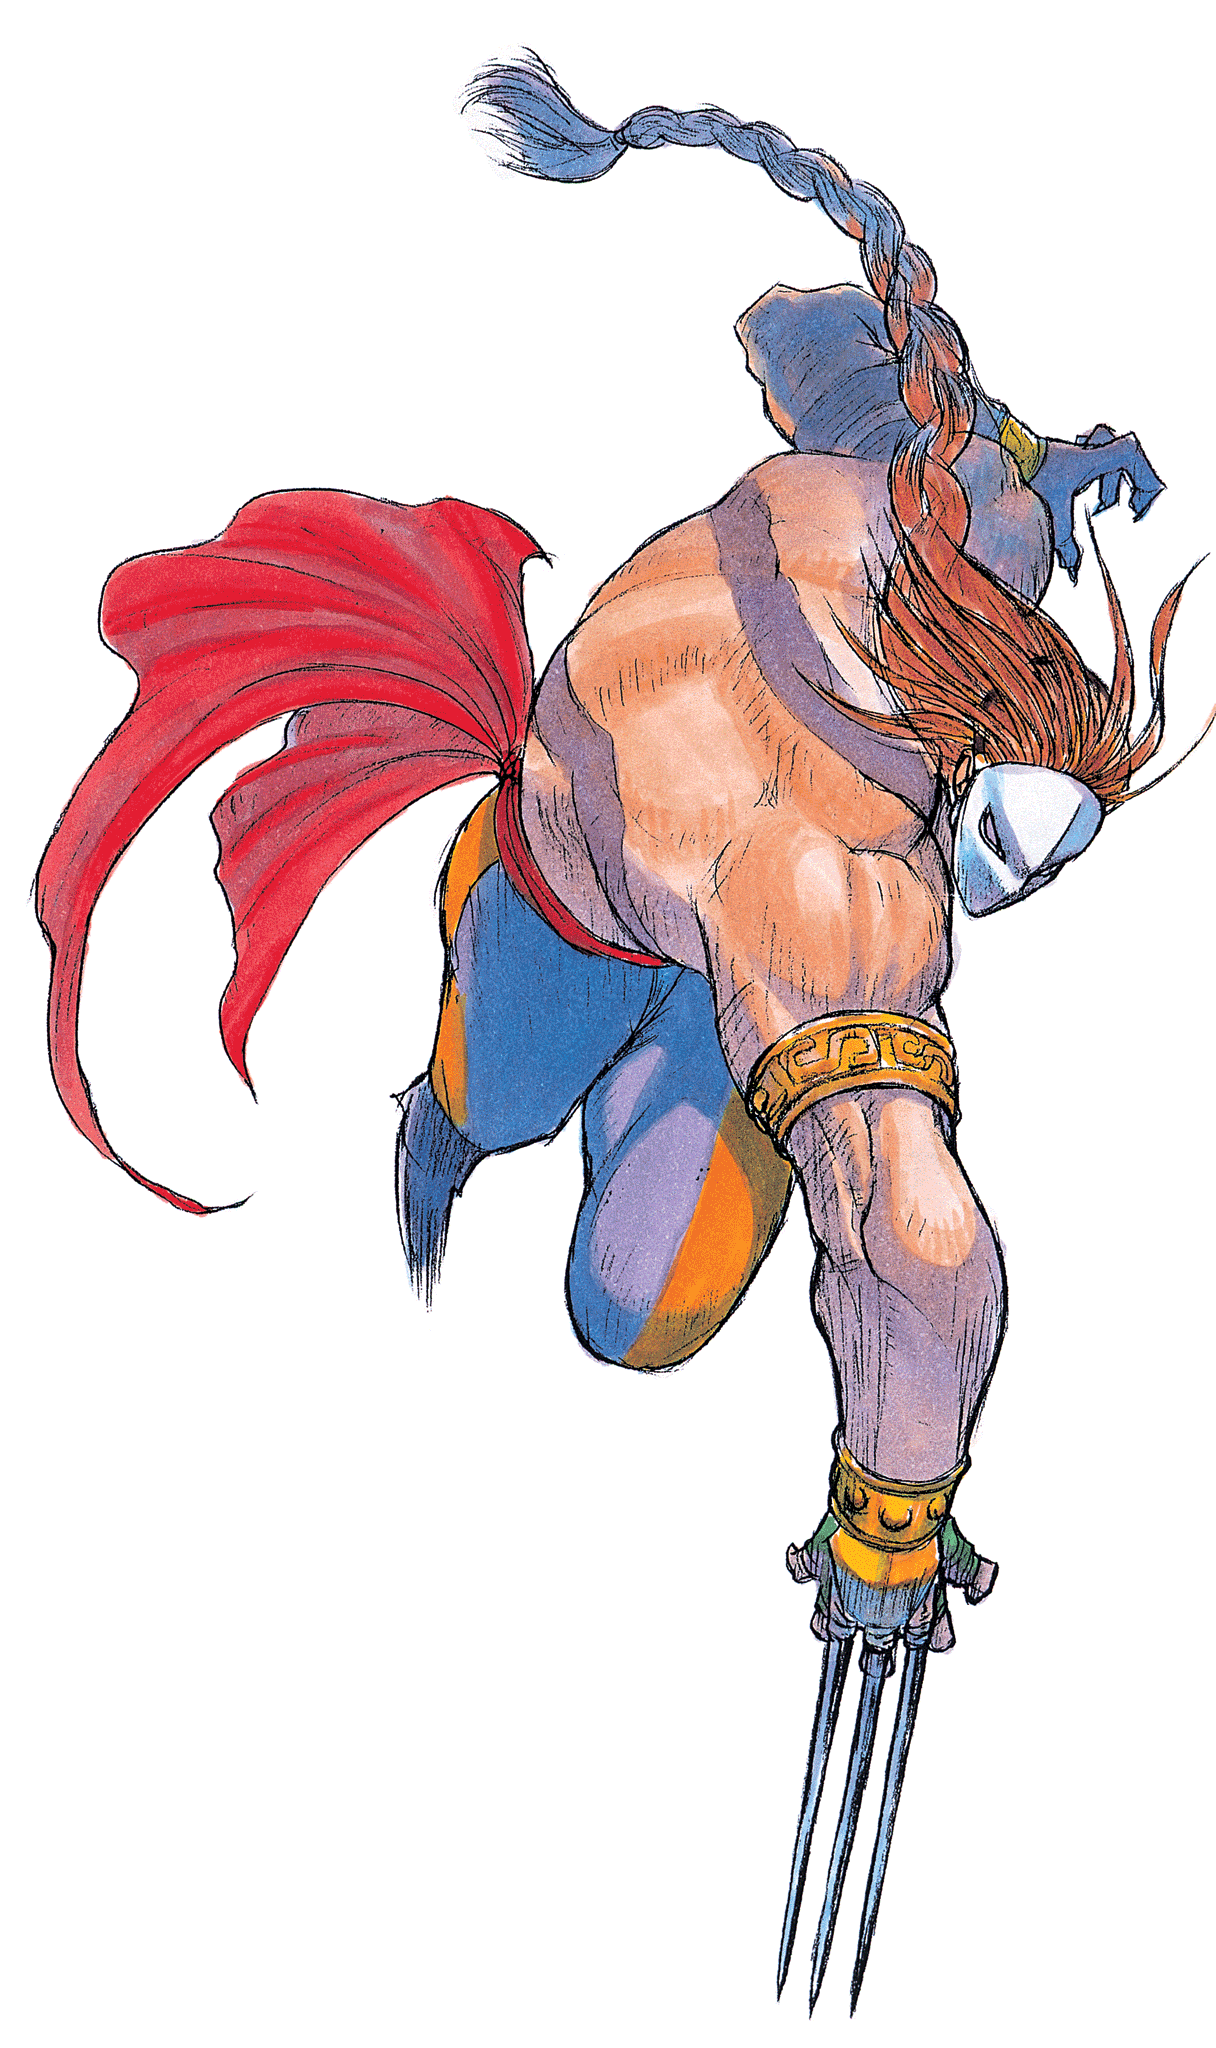 Vega - Street Fighter - Zerochan Anime Image Board